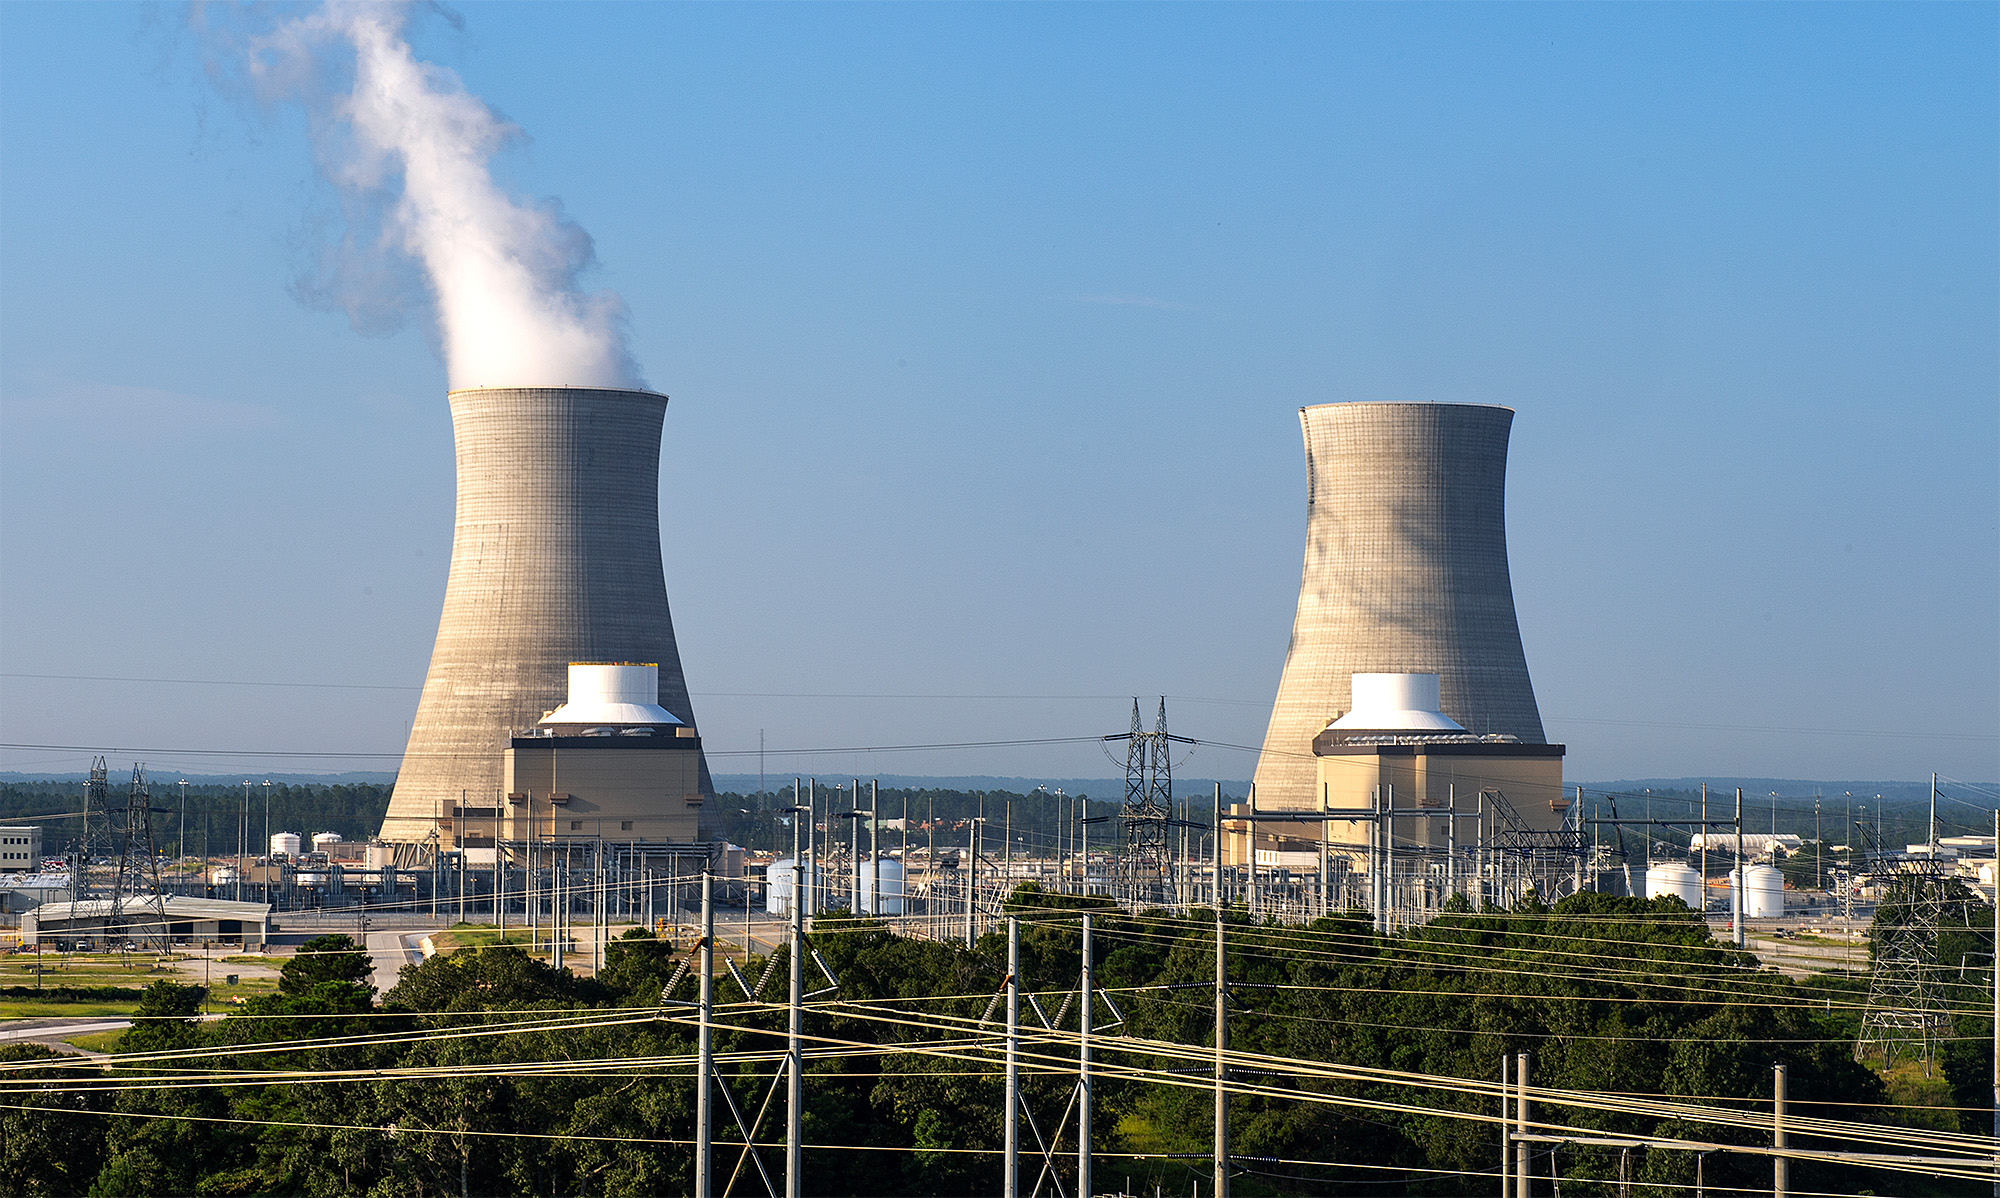 Nuclear power’s landmark project stumbles across the finish line